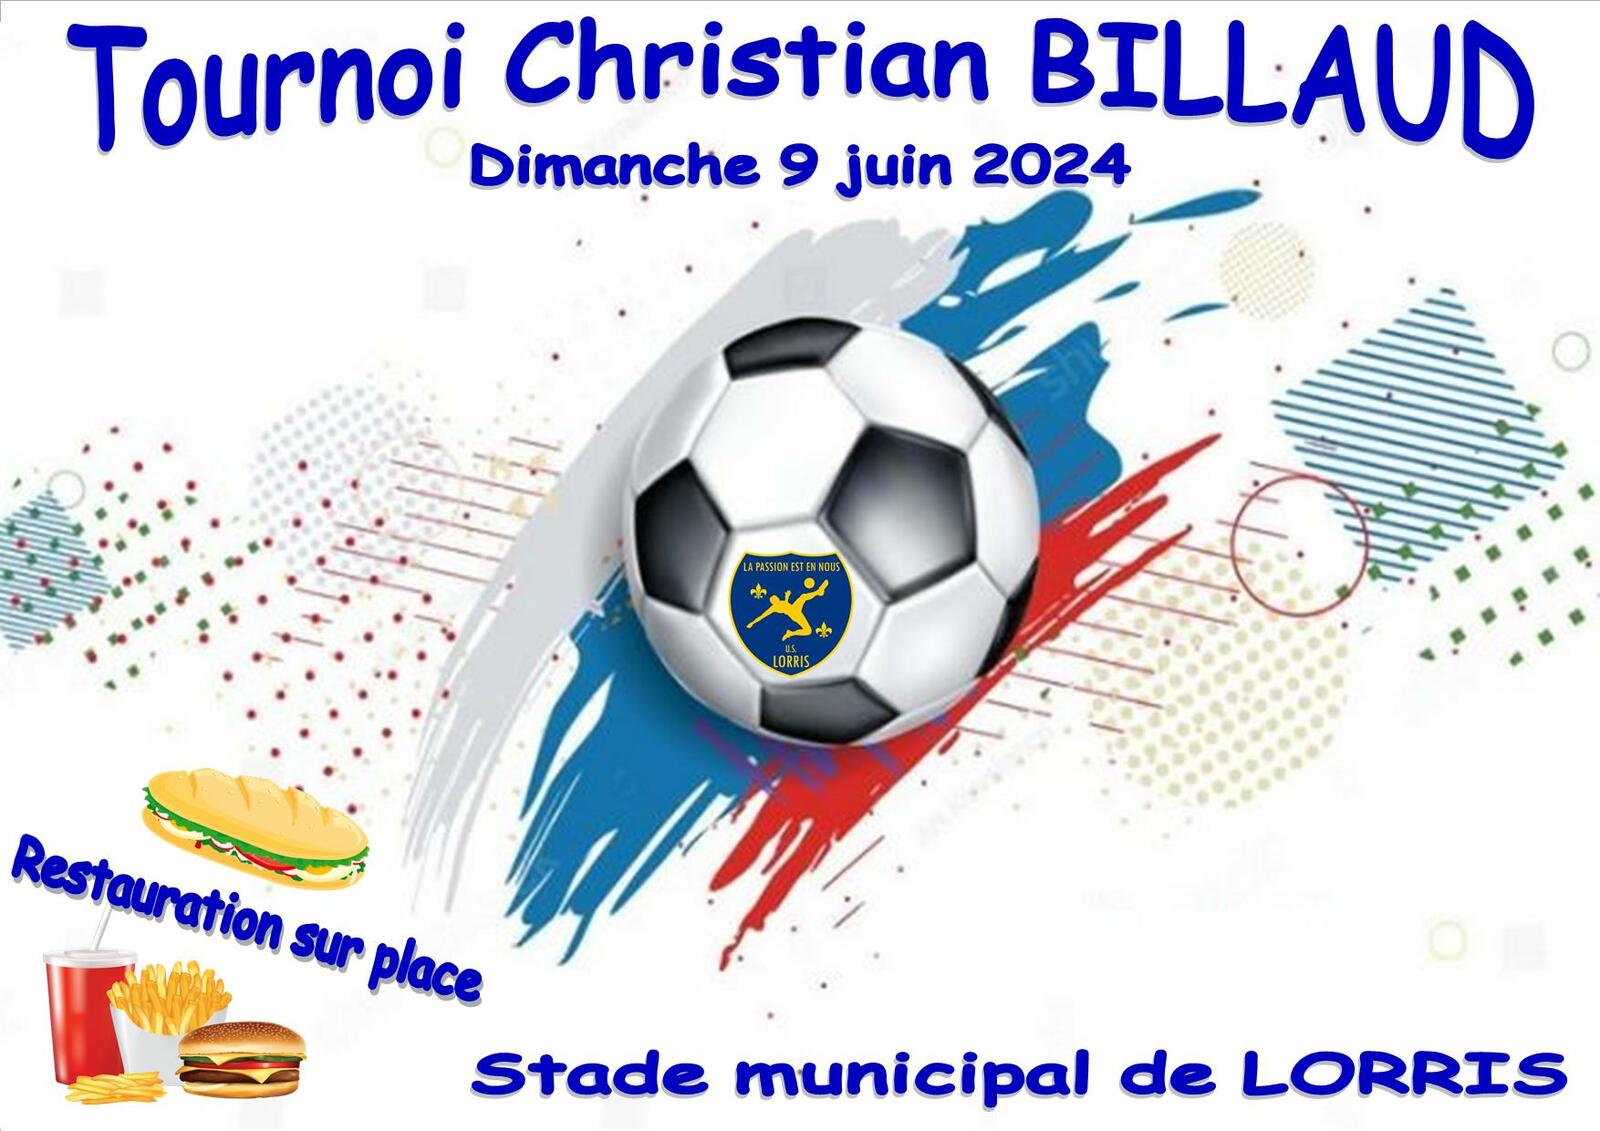 Tournoi Christian BILLAUD